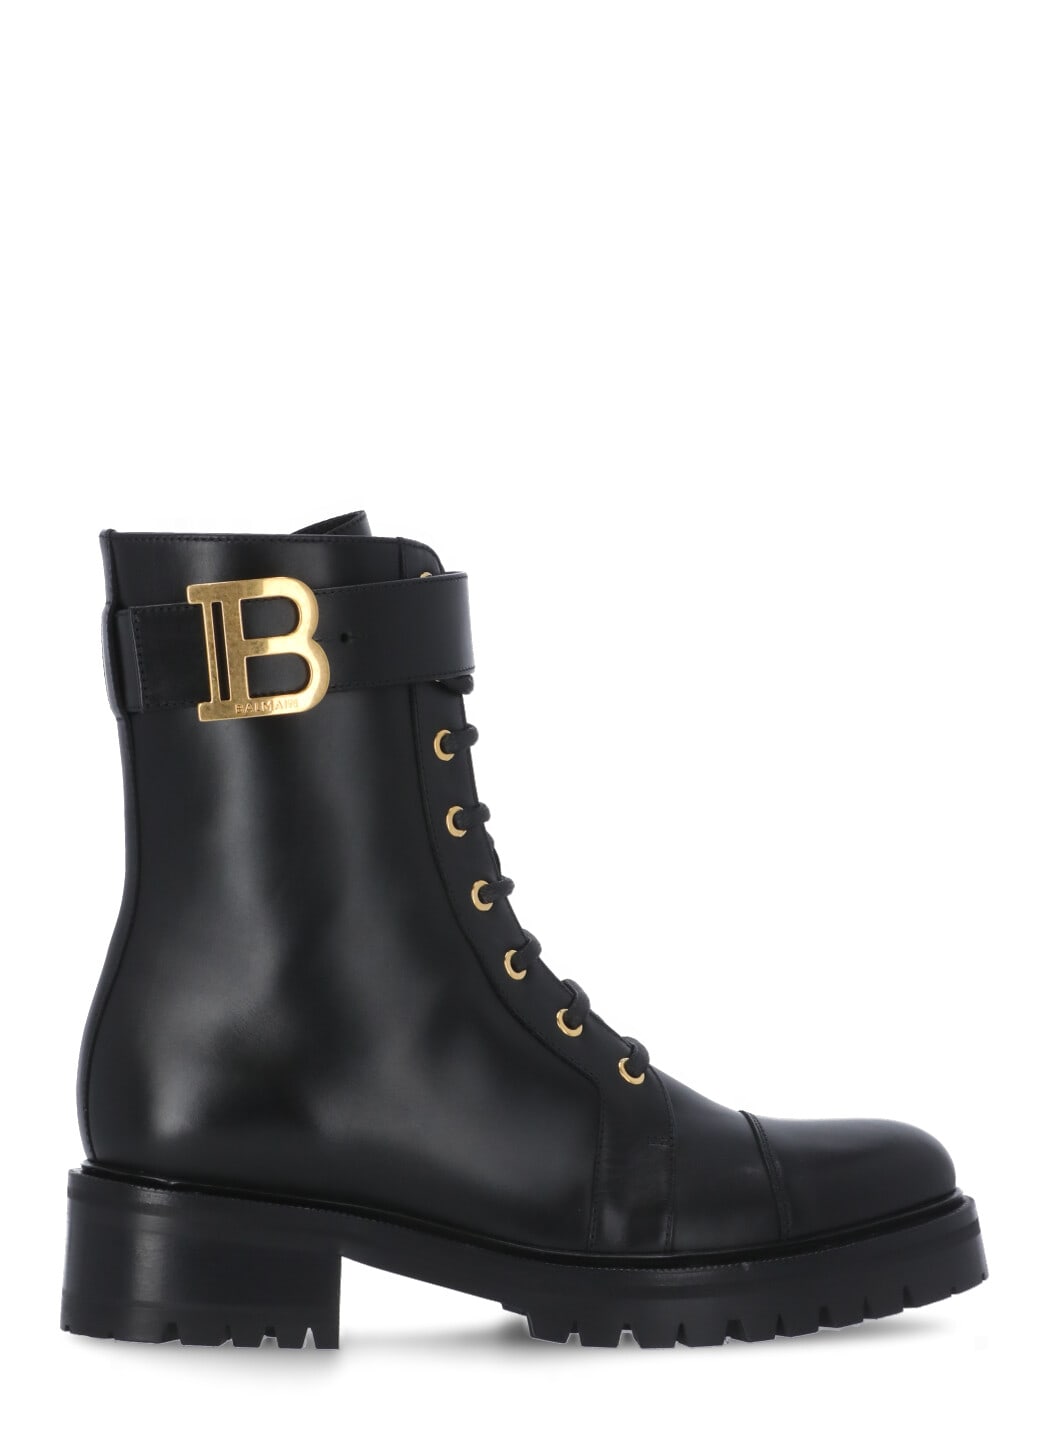 Buy Balmain Leather Boot online, shop Balmain shoes with free shipping